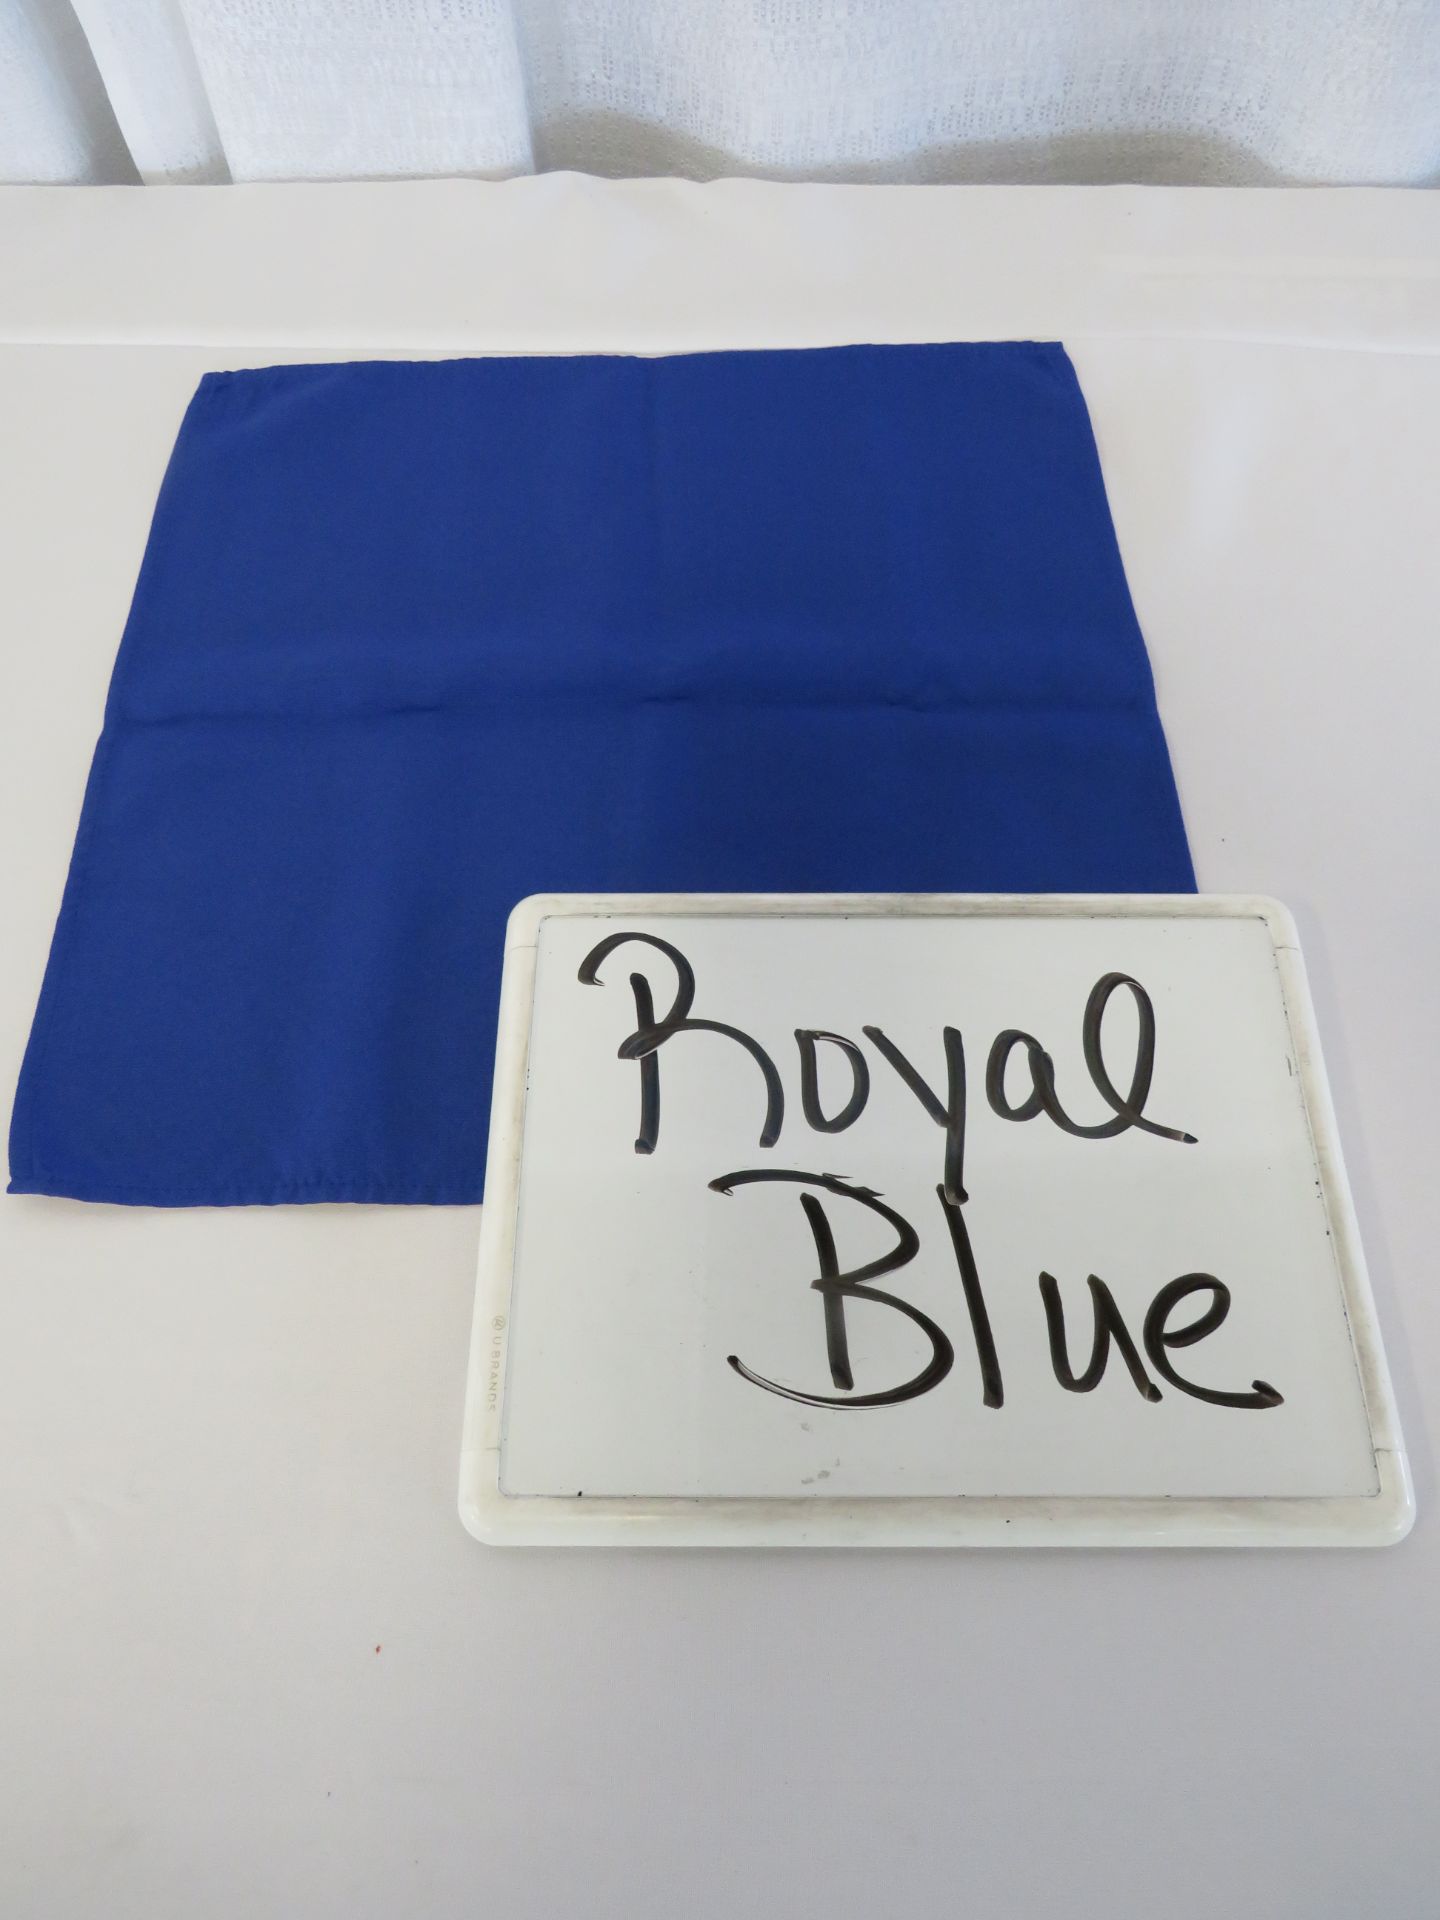 Table Skirt, 14' x 30", Royal Blue 1